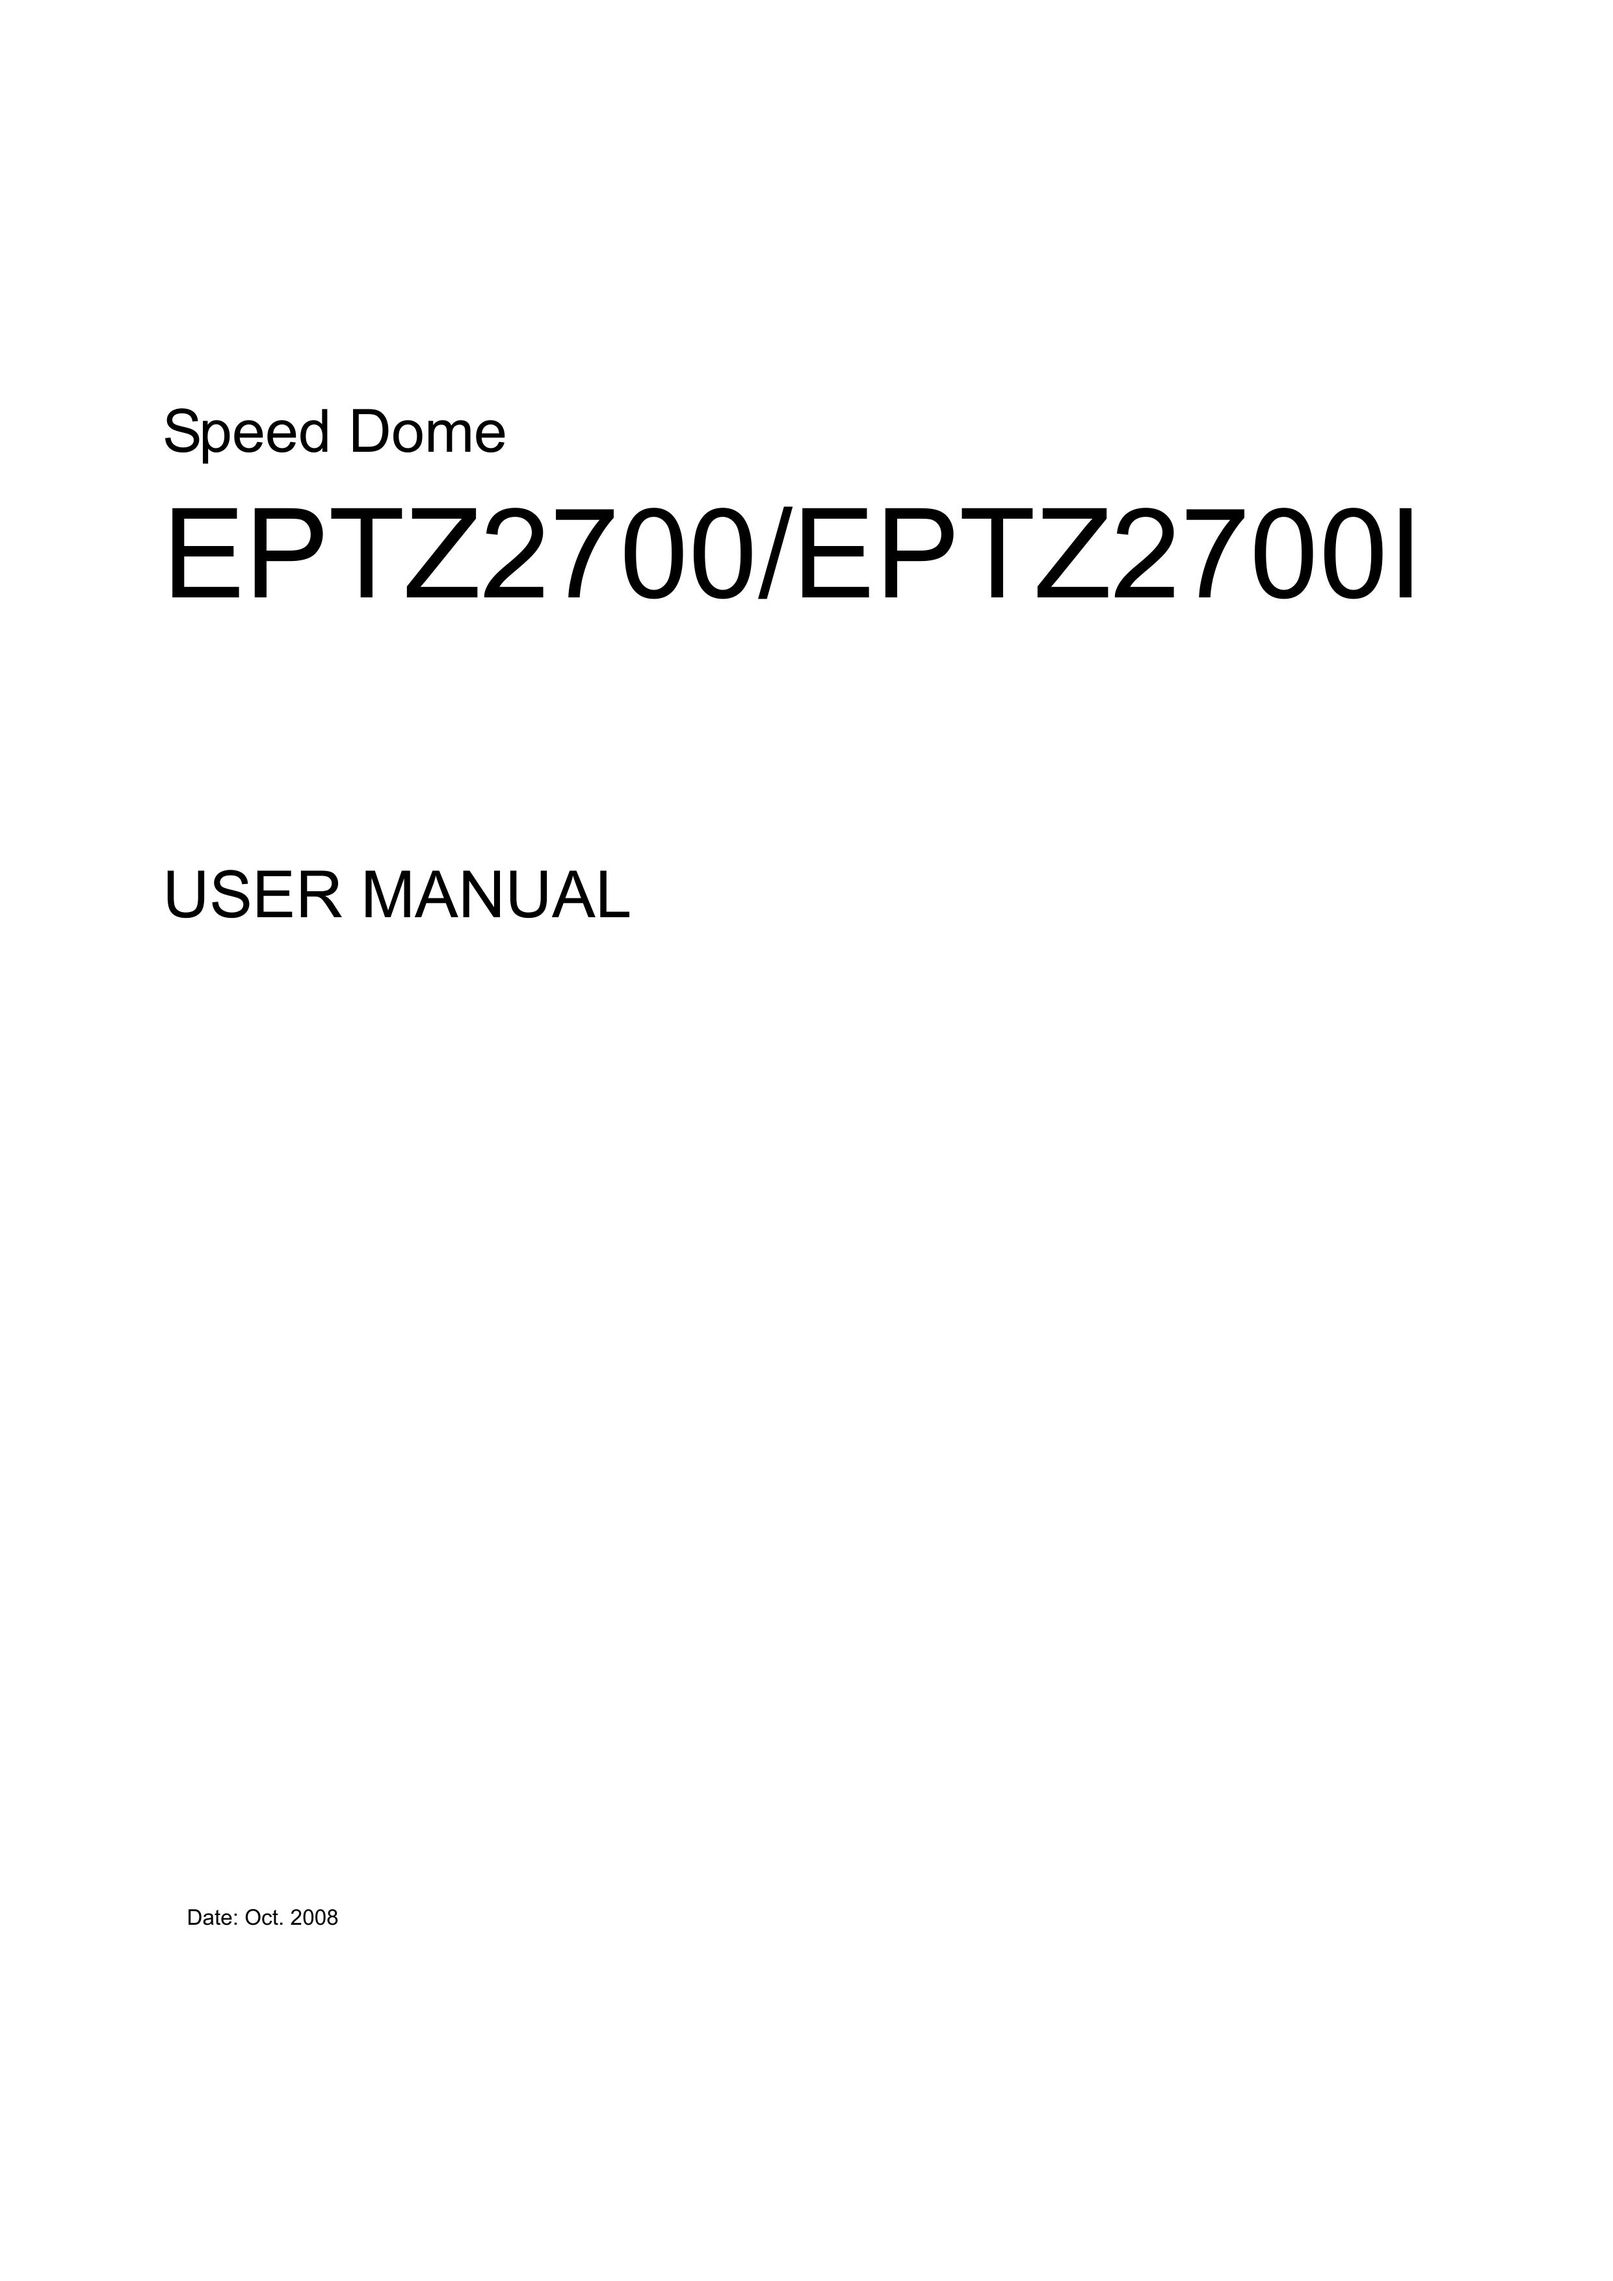 EverFocus EPTZ2700i Home Security System User Manual